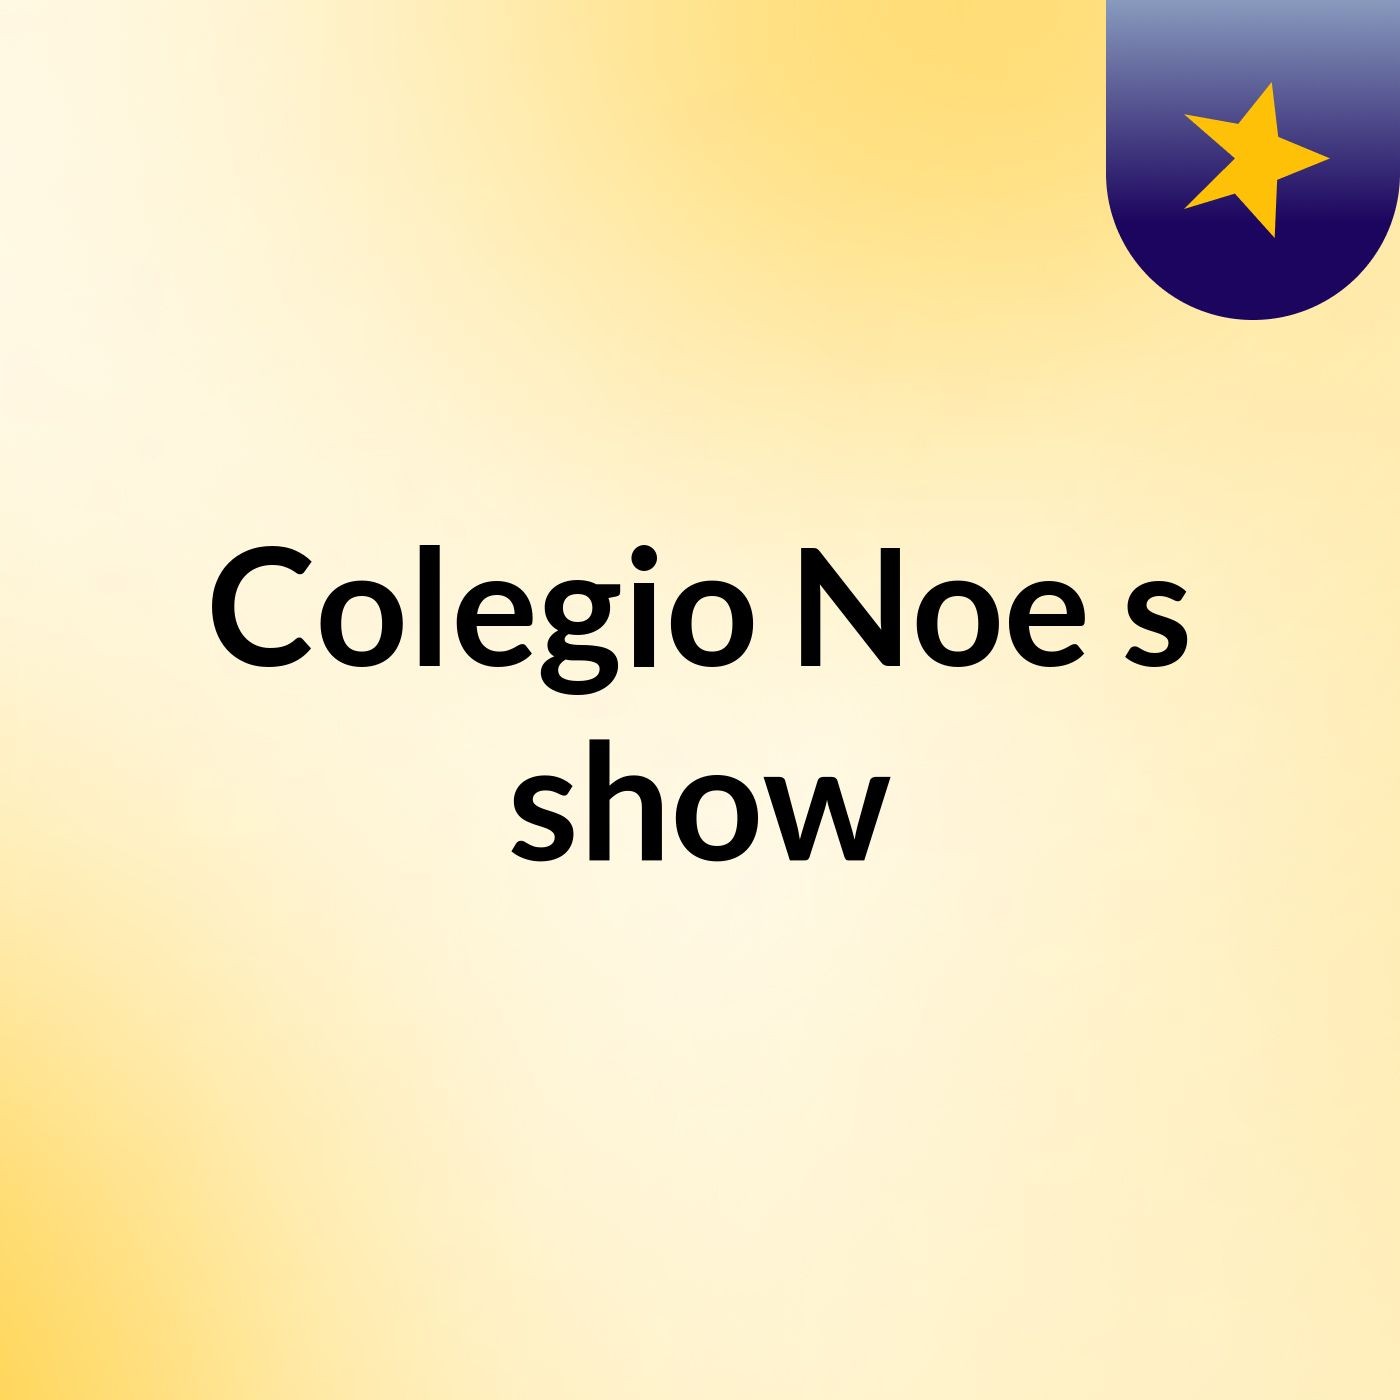 Colegio Noe's show